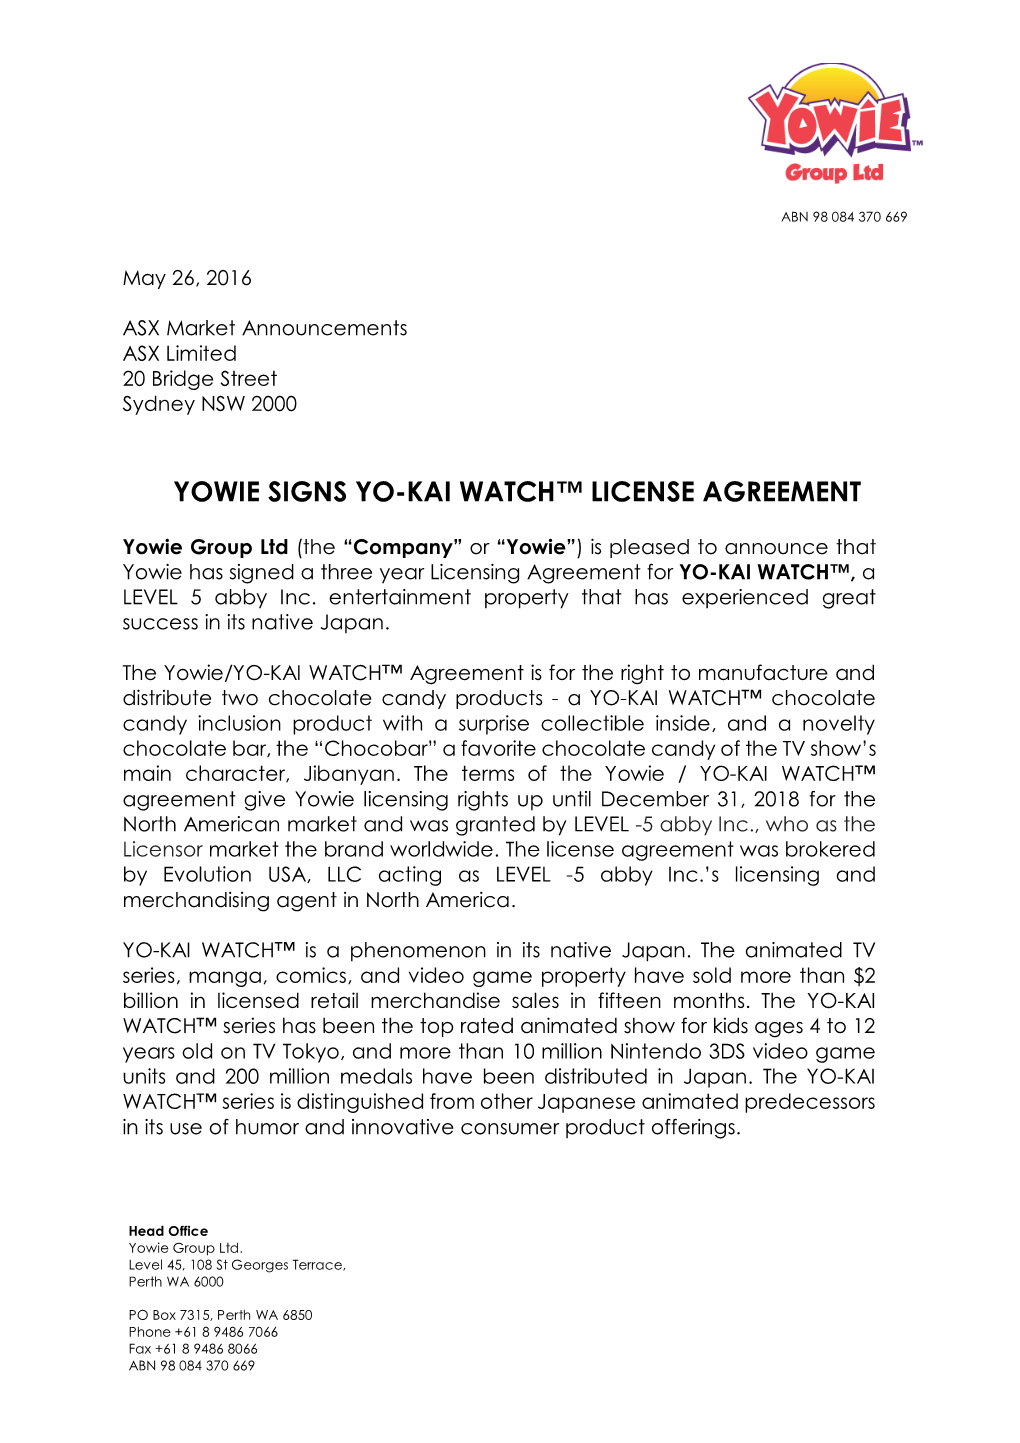 Yowie Signs Yo-Kai Watch License Agreement